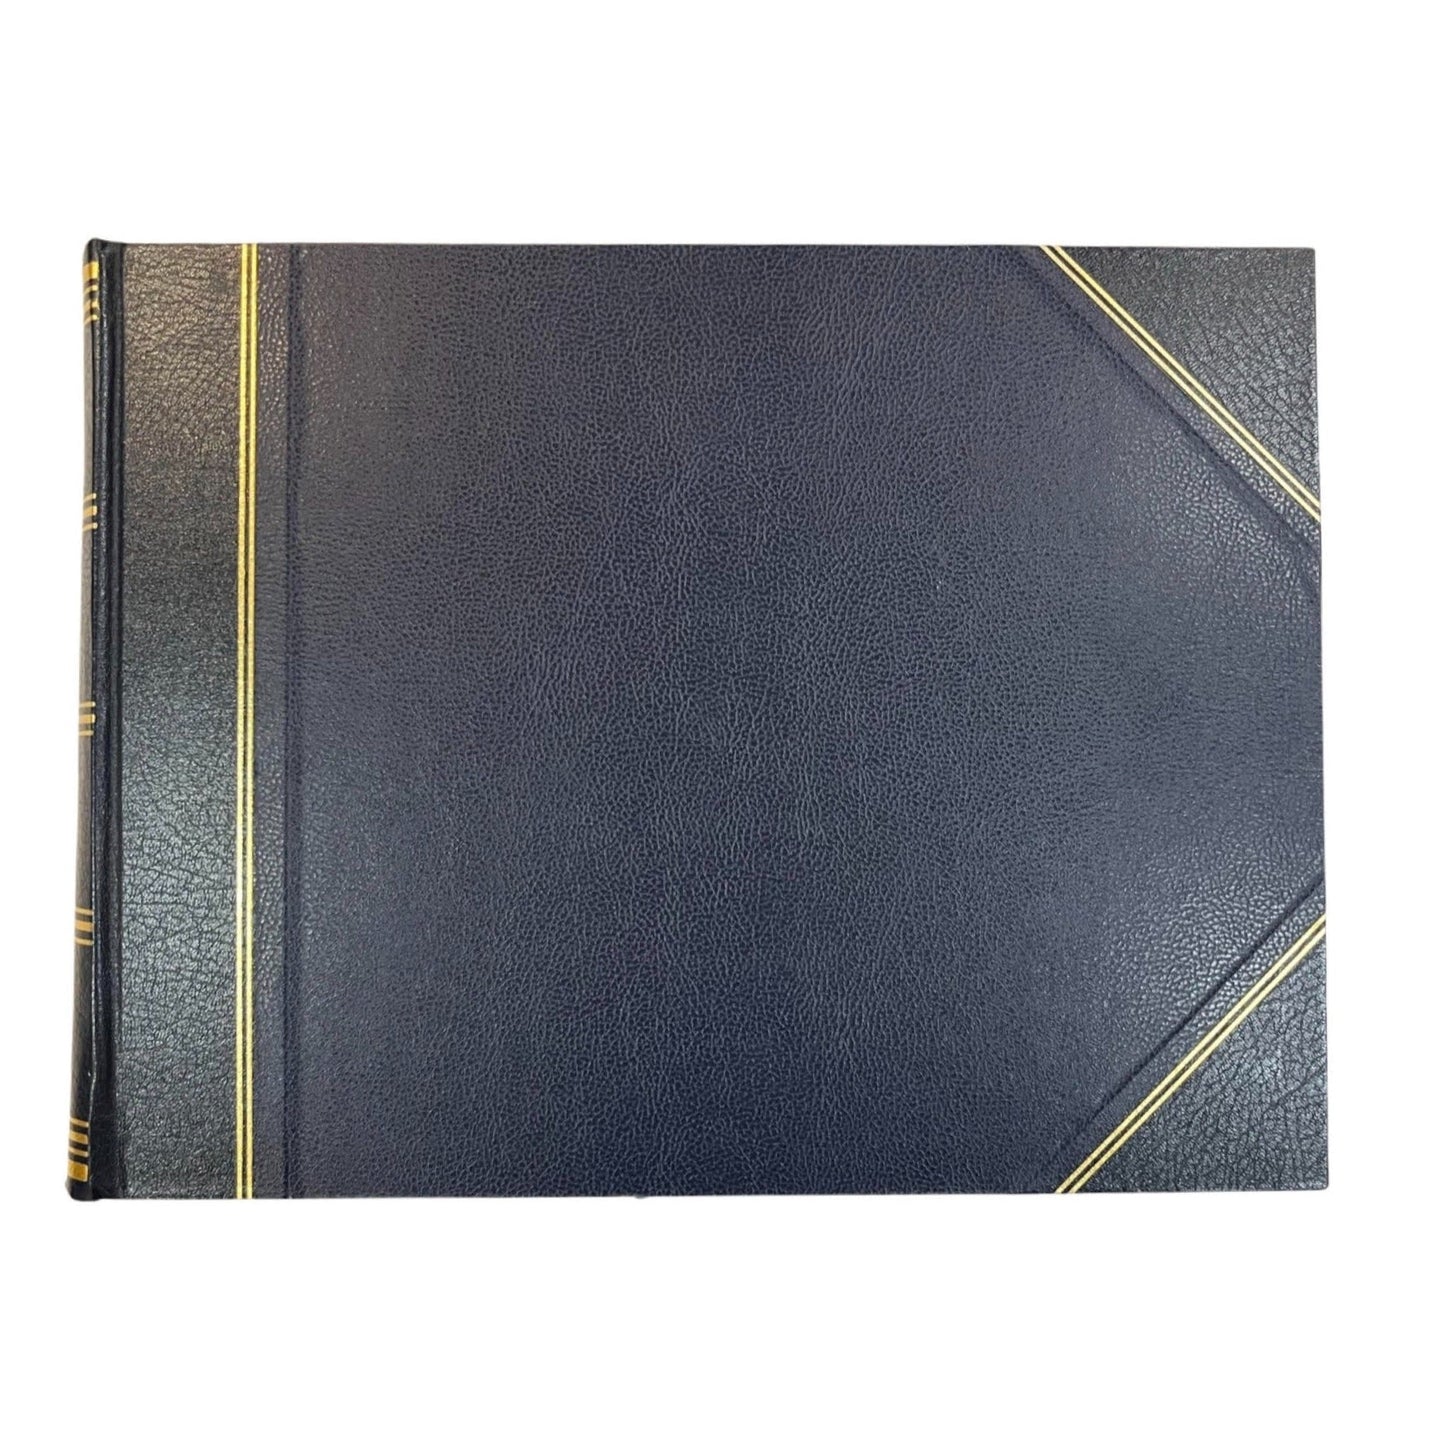 Gfoeller Custom Leatherbound Scrapbook Album | Gold Stamp Personalization | Archival Box | Book Mark | 11 x 15 inches